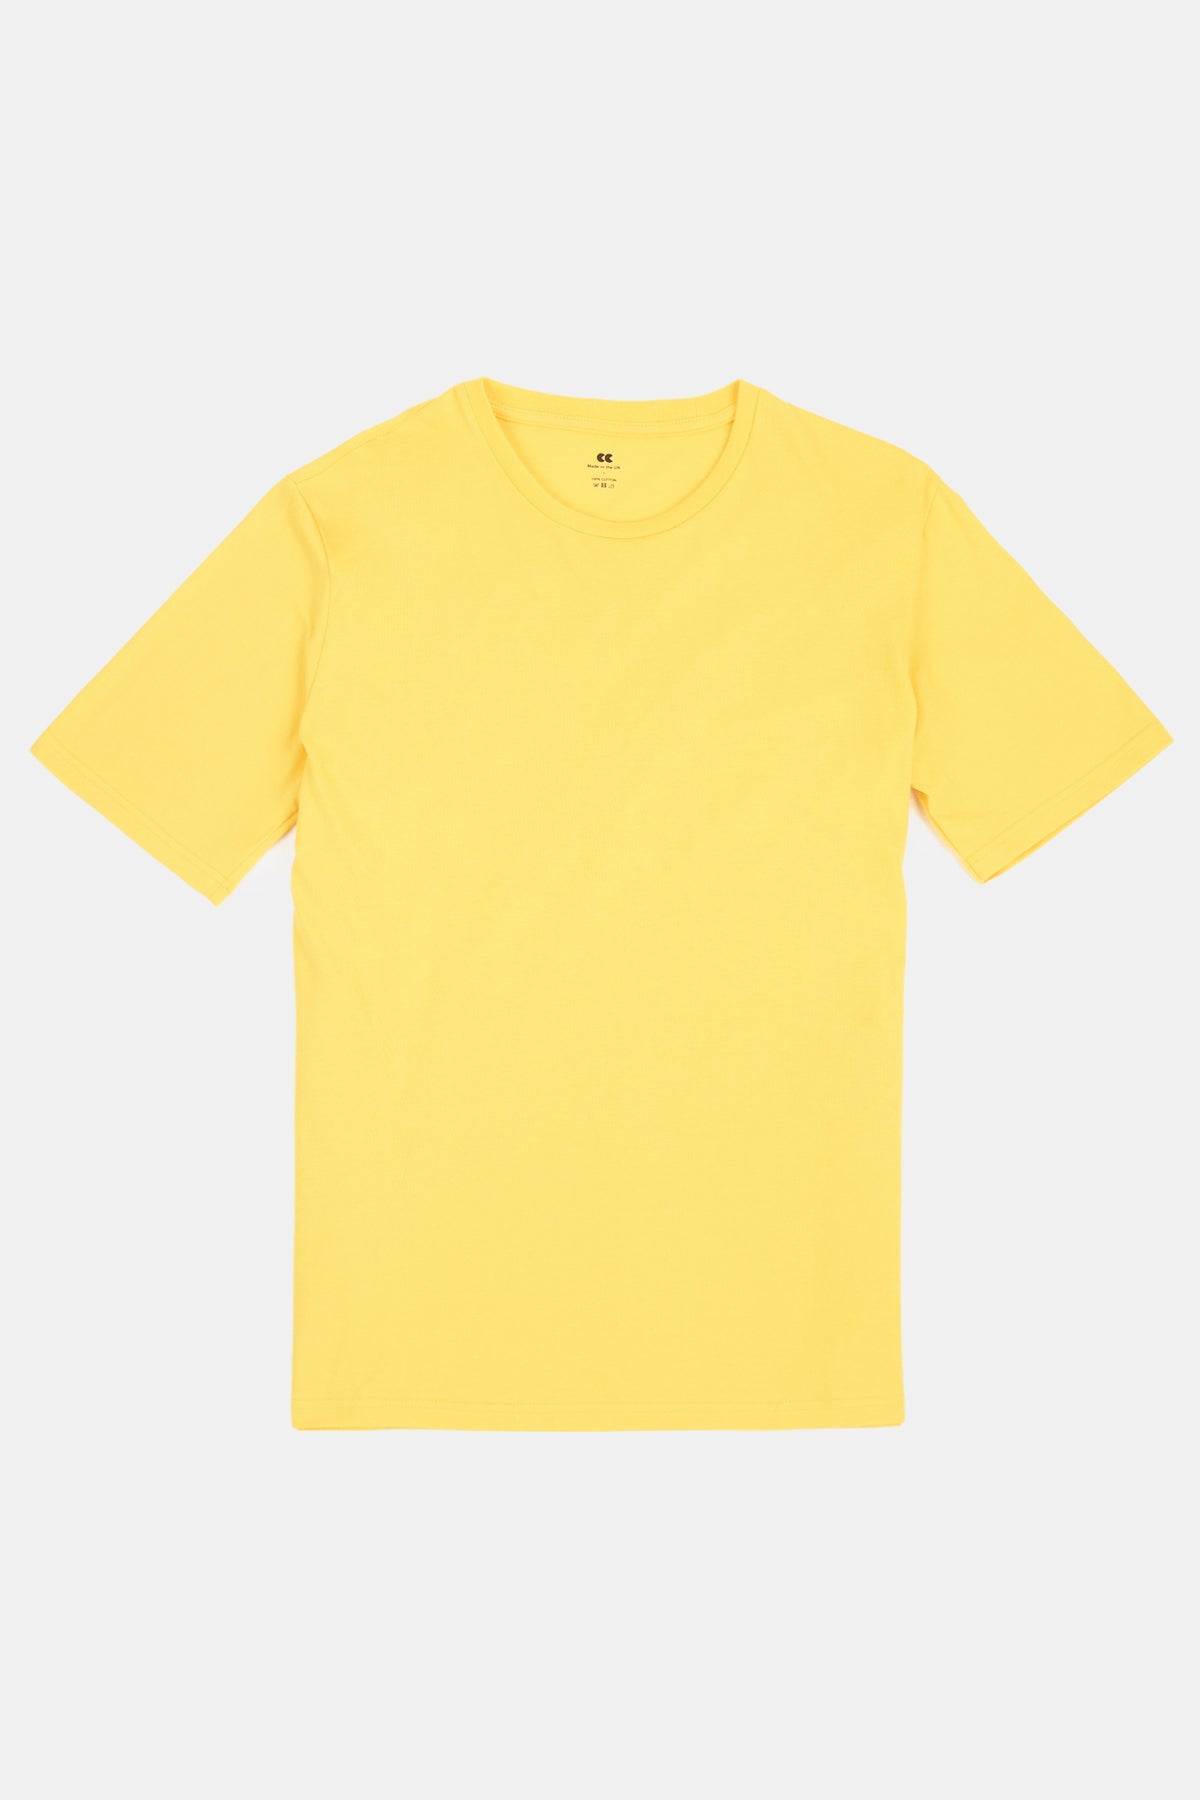 
            men&#39;s short sleeve t-shirt in sunshine yellow flat lay